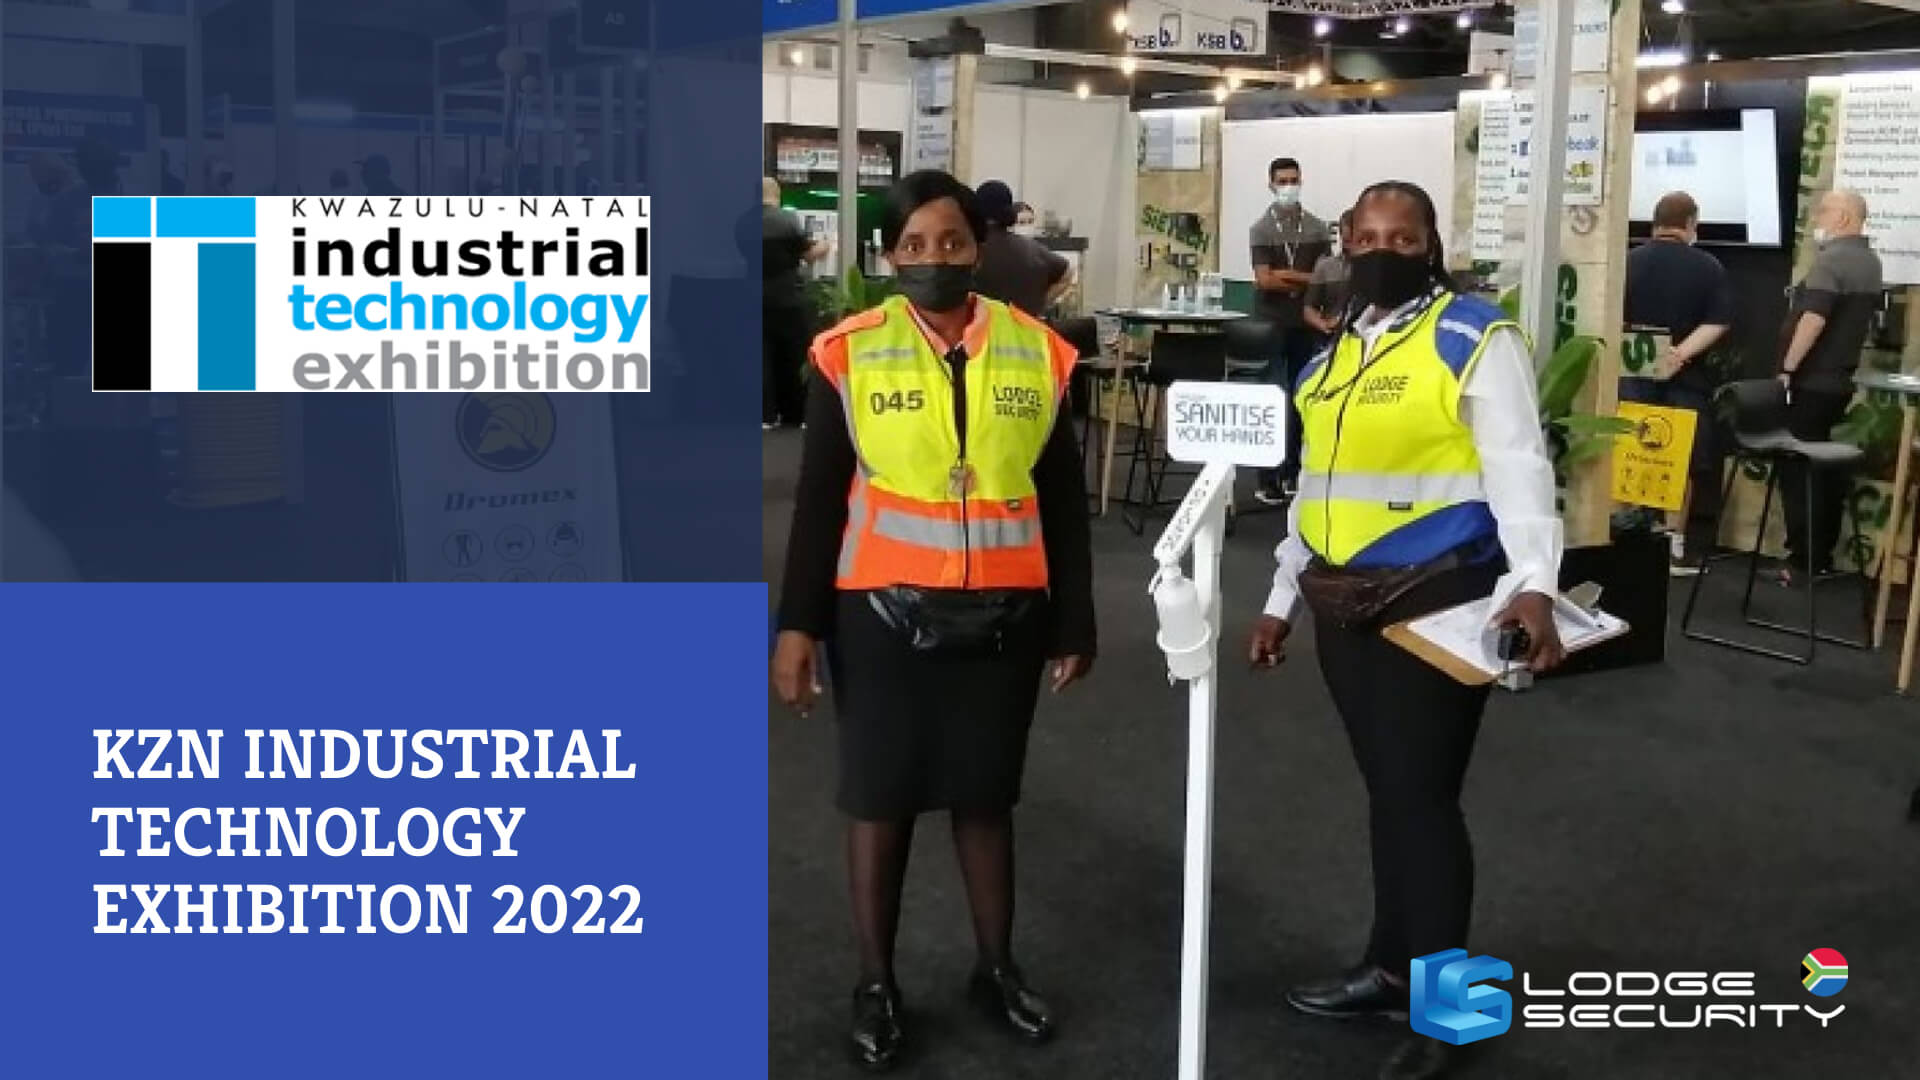 KZN Industrial Technology Exhibition 2022